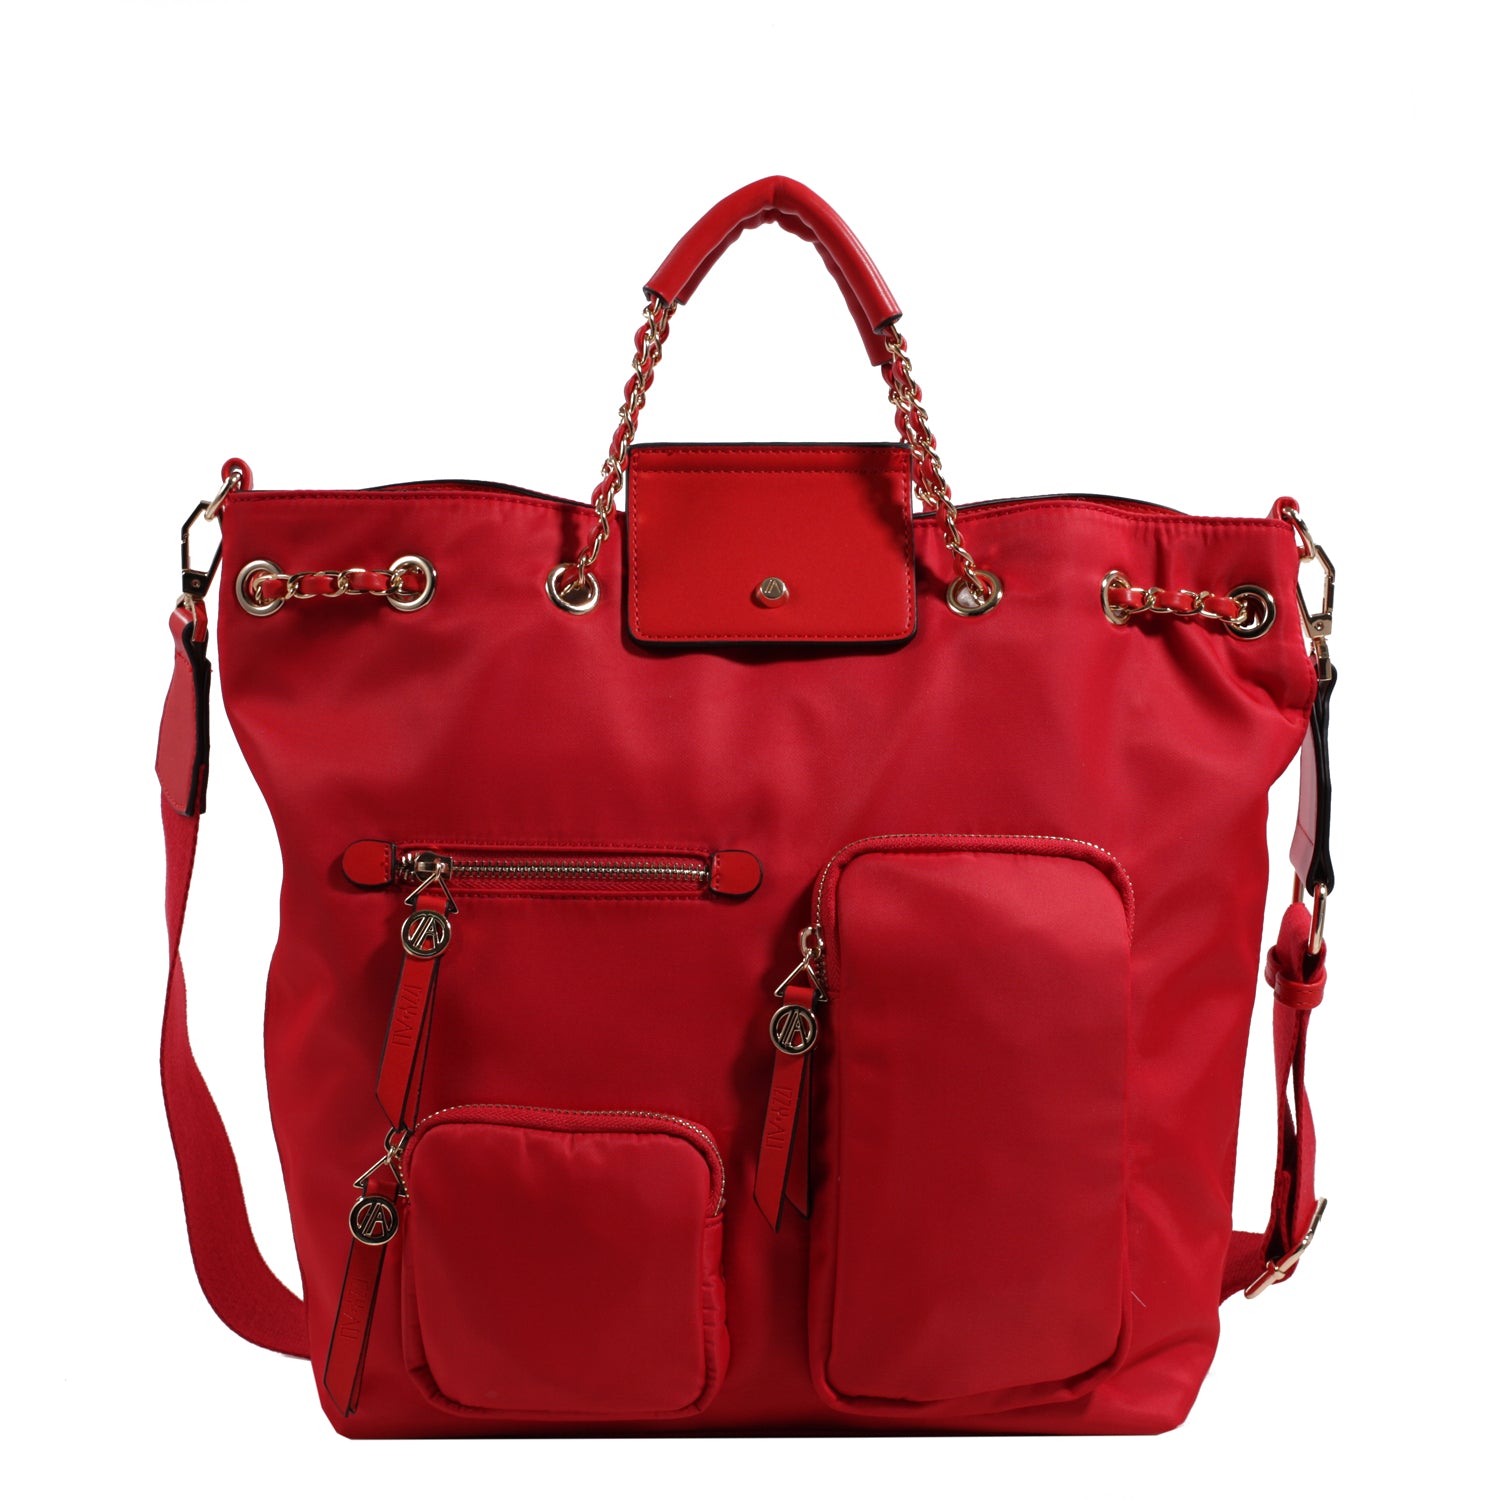 Claudia Firenze Cl10890 Damiana - Calf Leather Handbags at FORZIERI